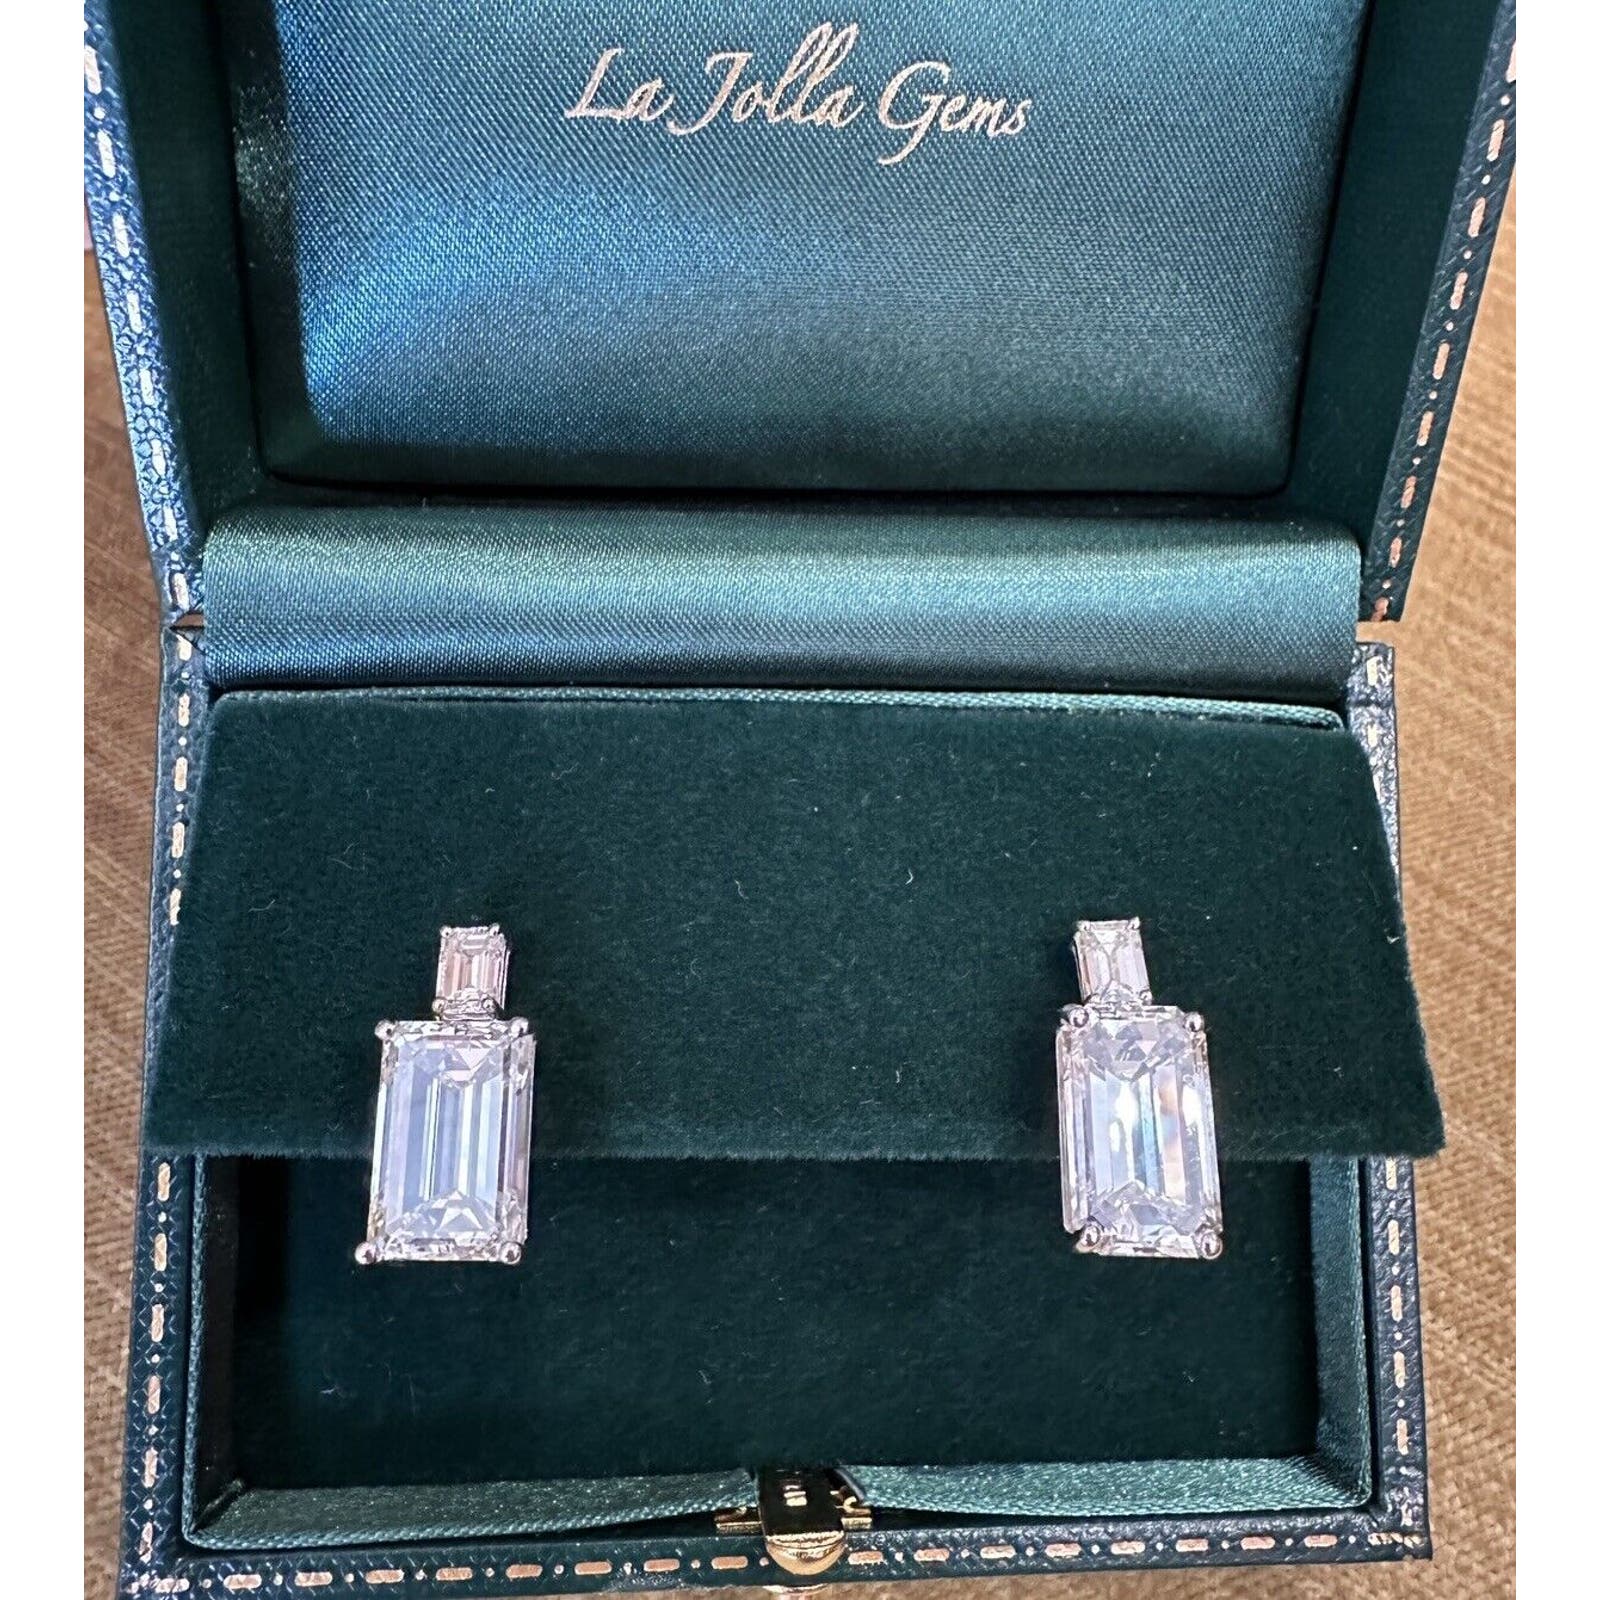 GIA Certified Emerald Cut Diamond Drop Earrings in 18k White Gold - C300NB